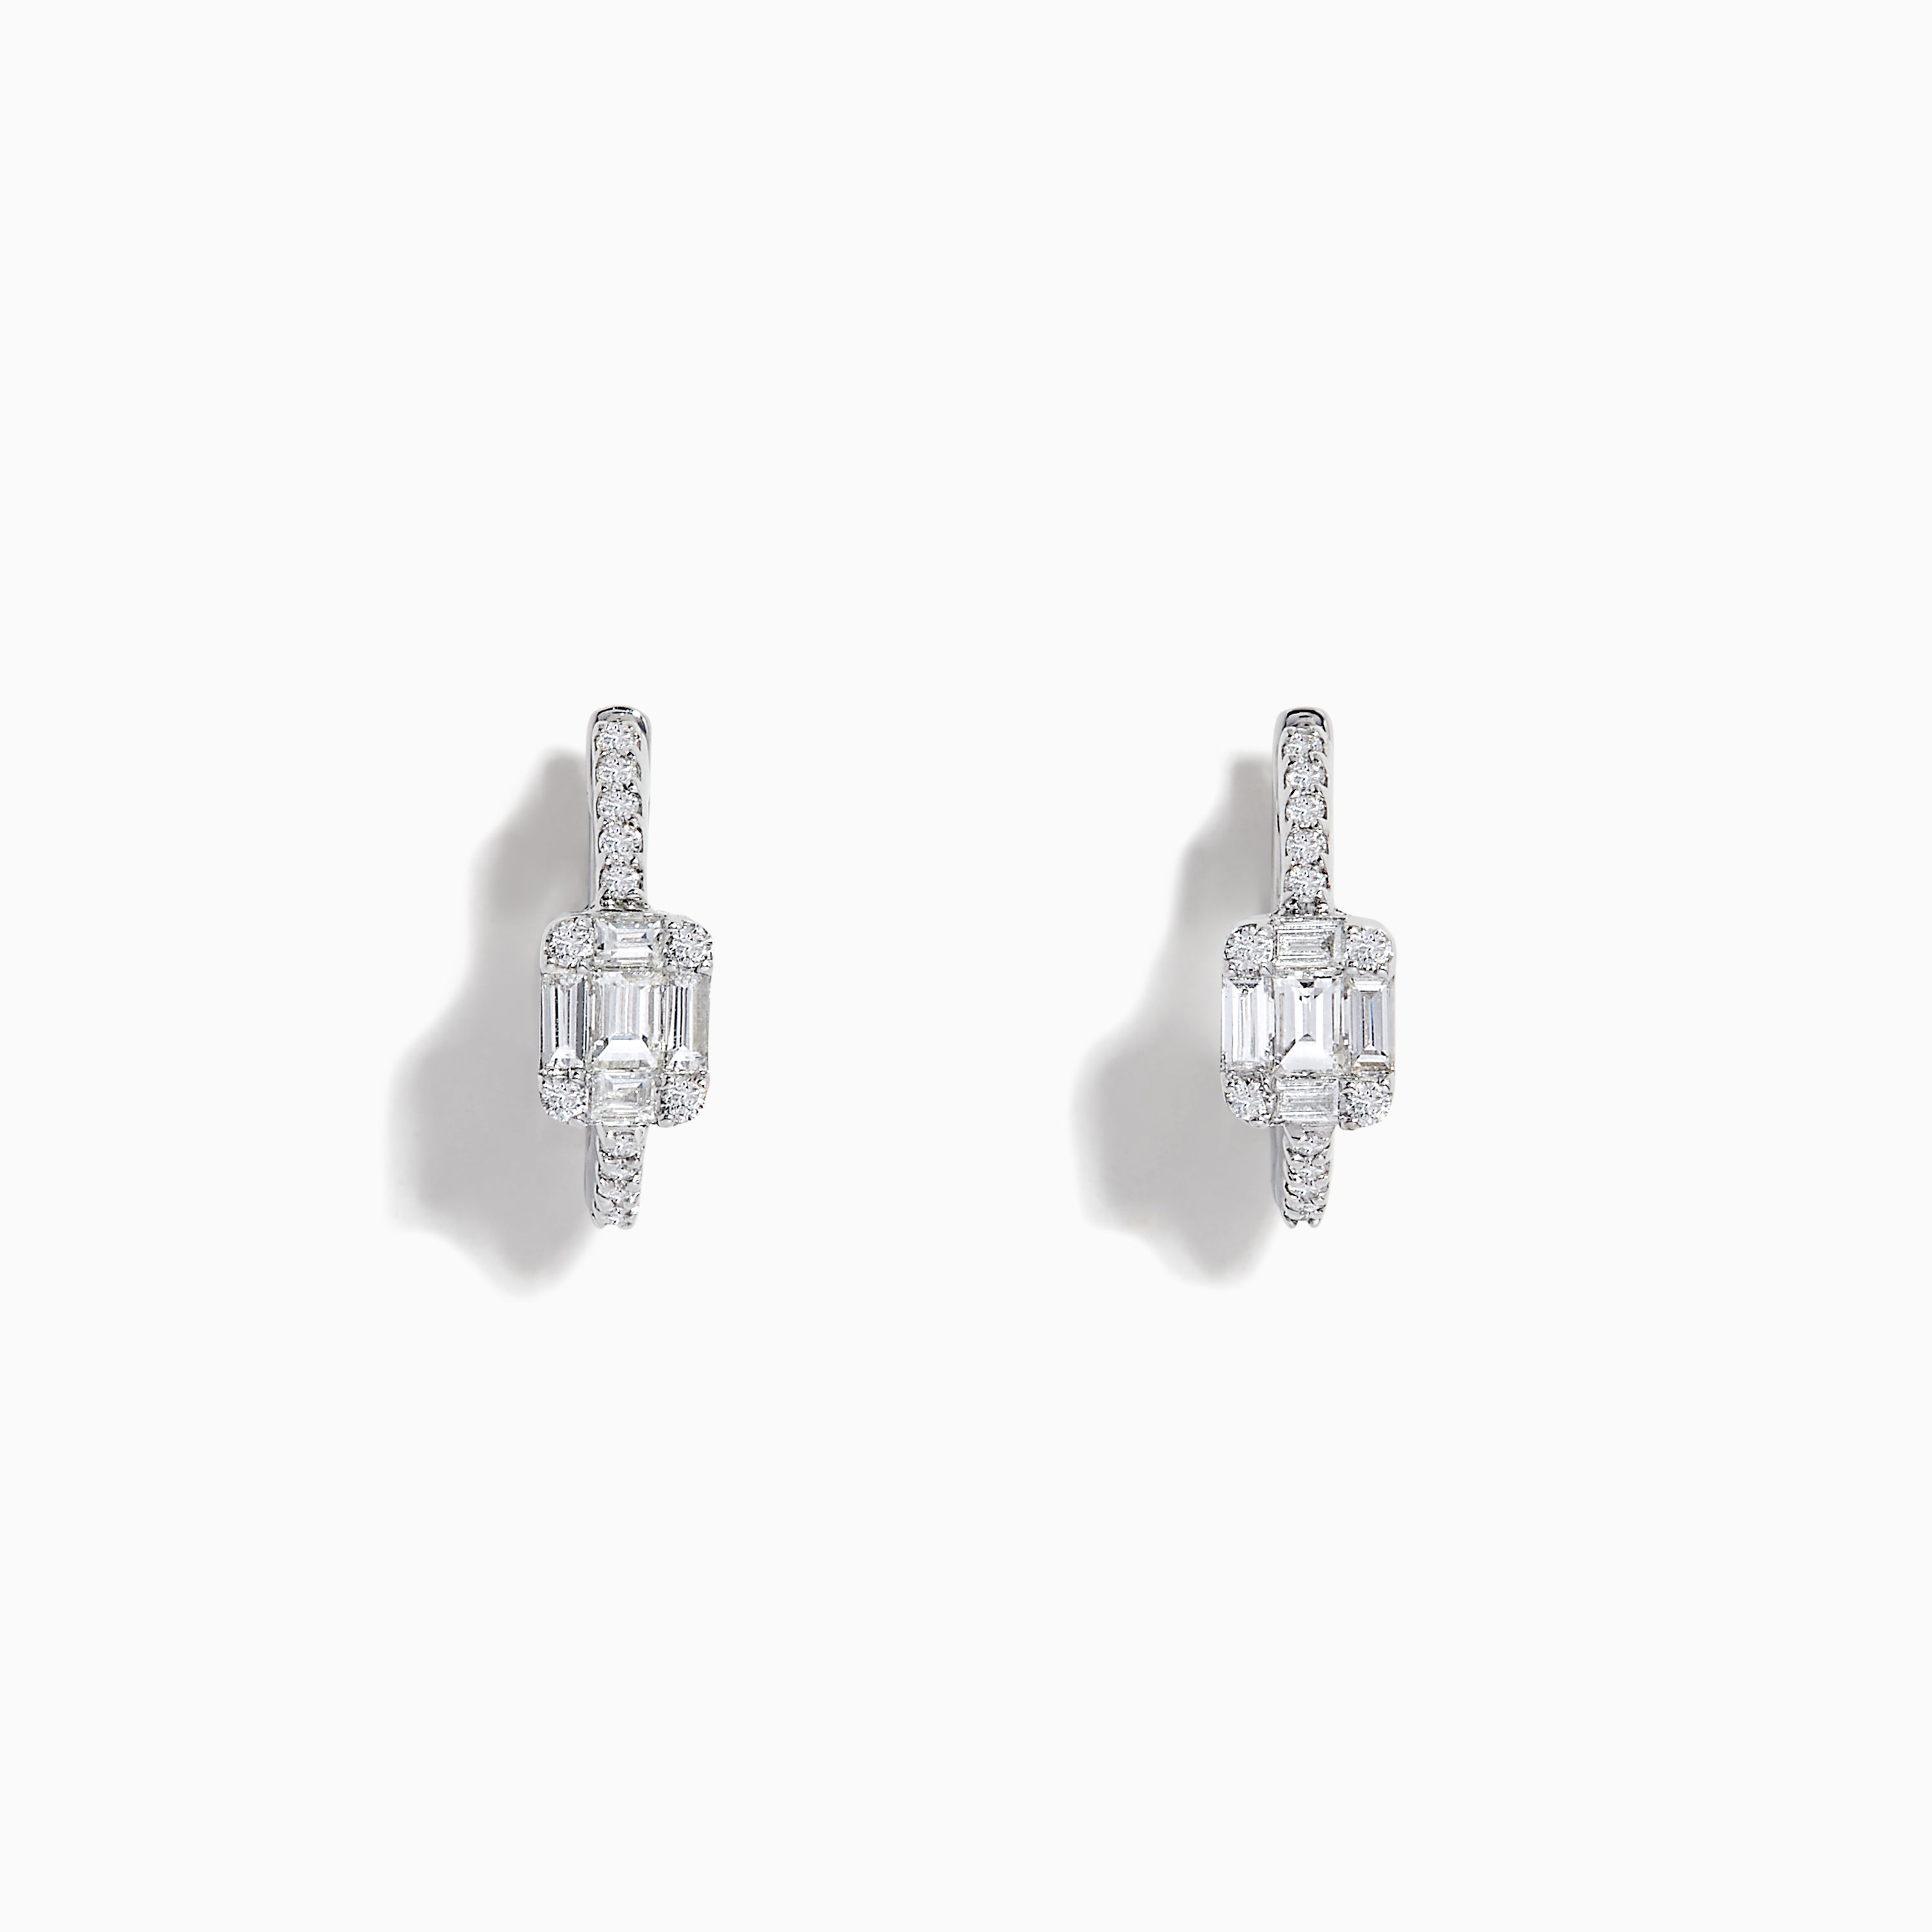 Effy Classique 14K White Gold Diamond Huggie Earrings, 0.49 TCW